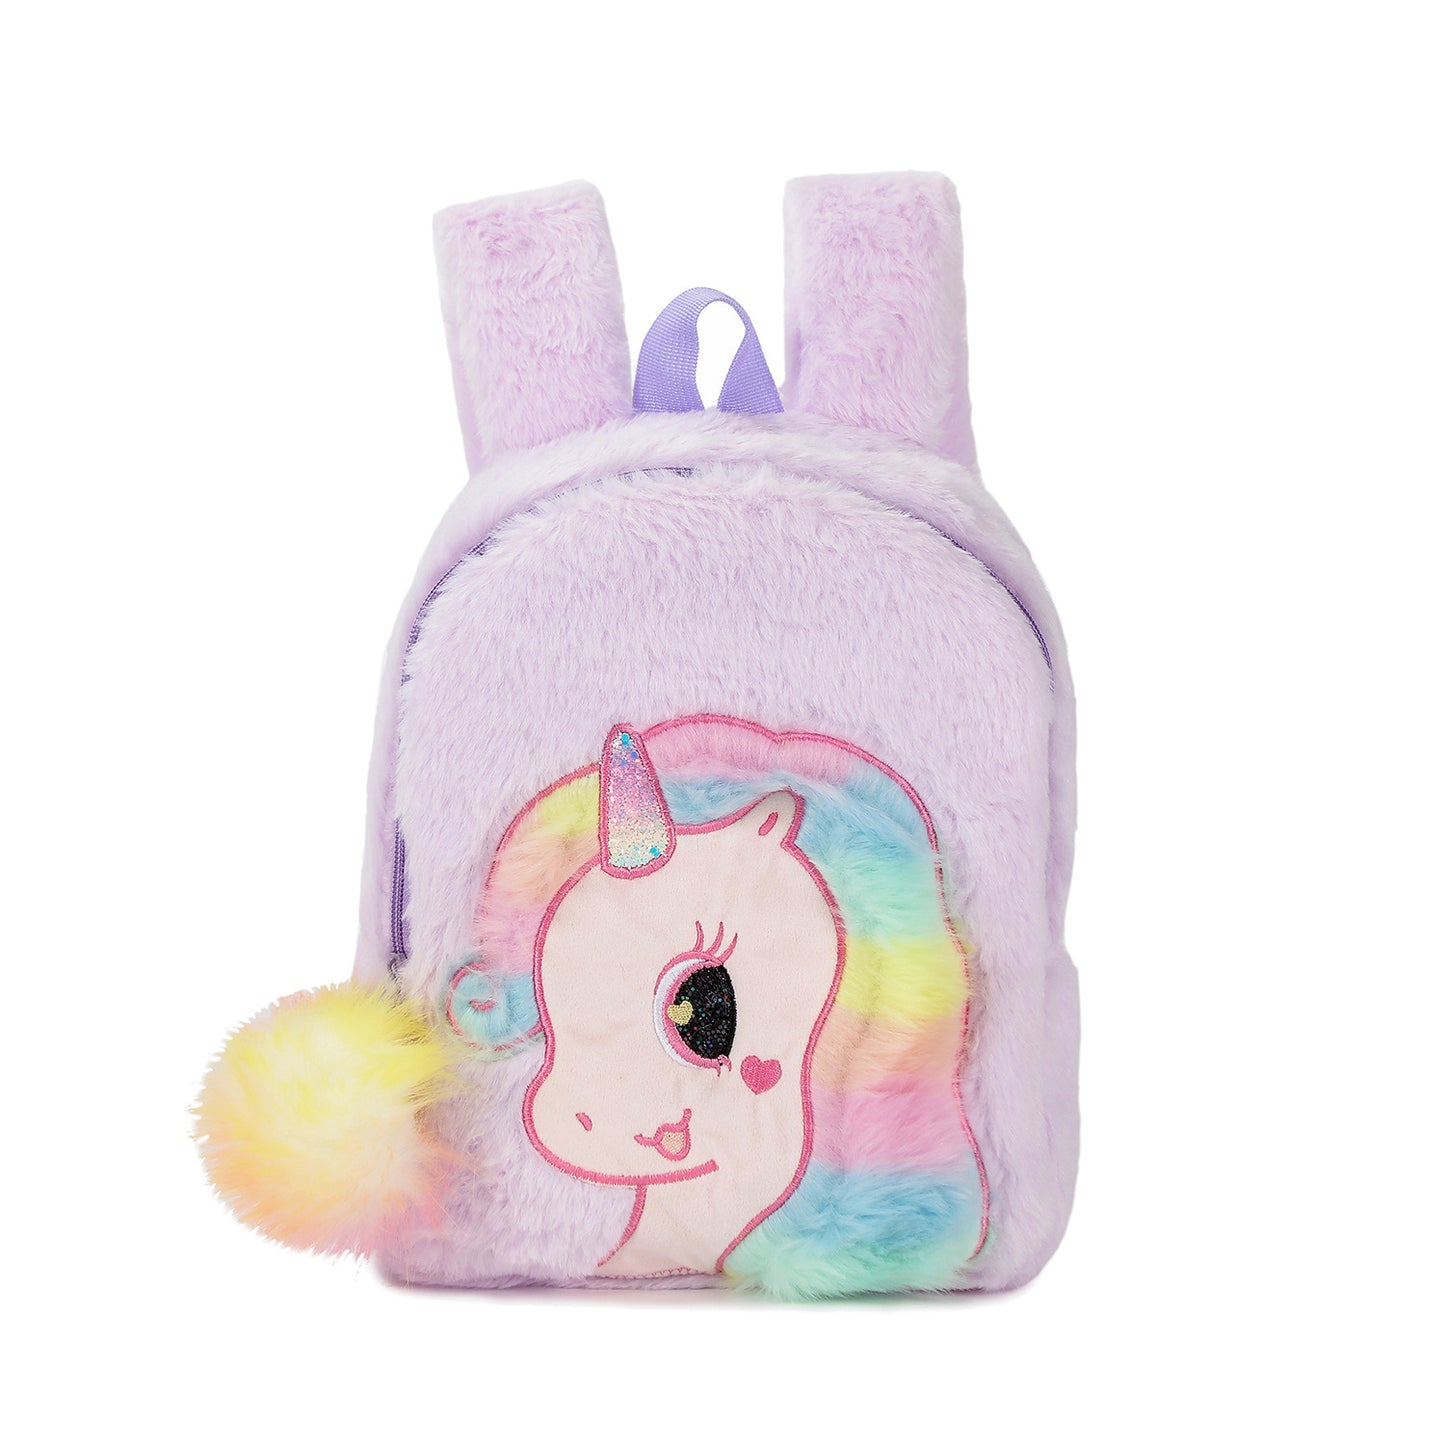 Personalized Embroidered Toddler-Size Plush Unicorn Backpacks